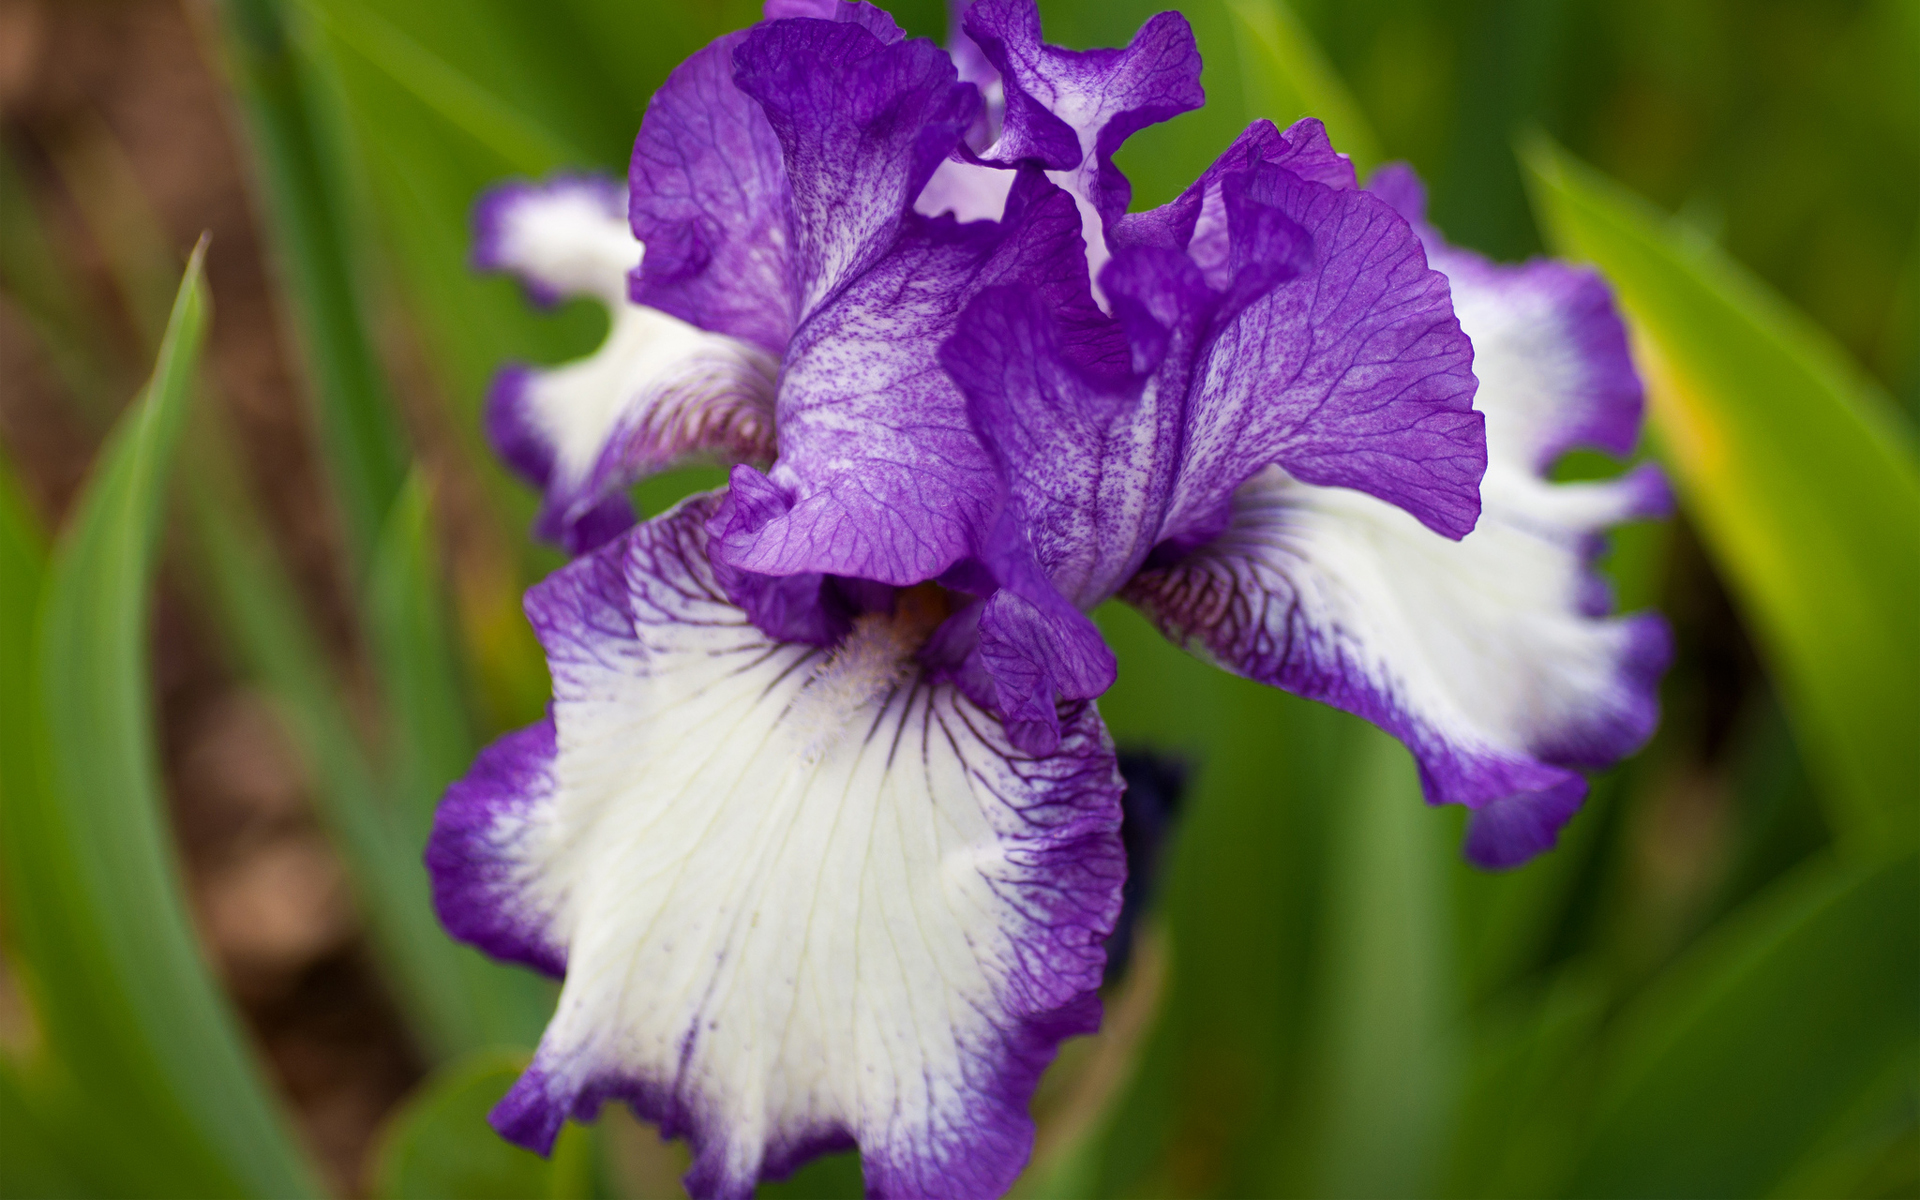 290521 descargar imagen tierra/naturaleza, iris, flor, flor purpura, flores: fondos de pantalla y protectores de pantalla gratis